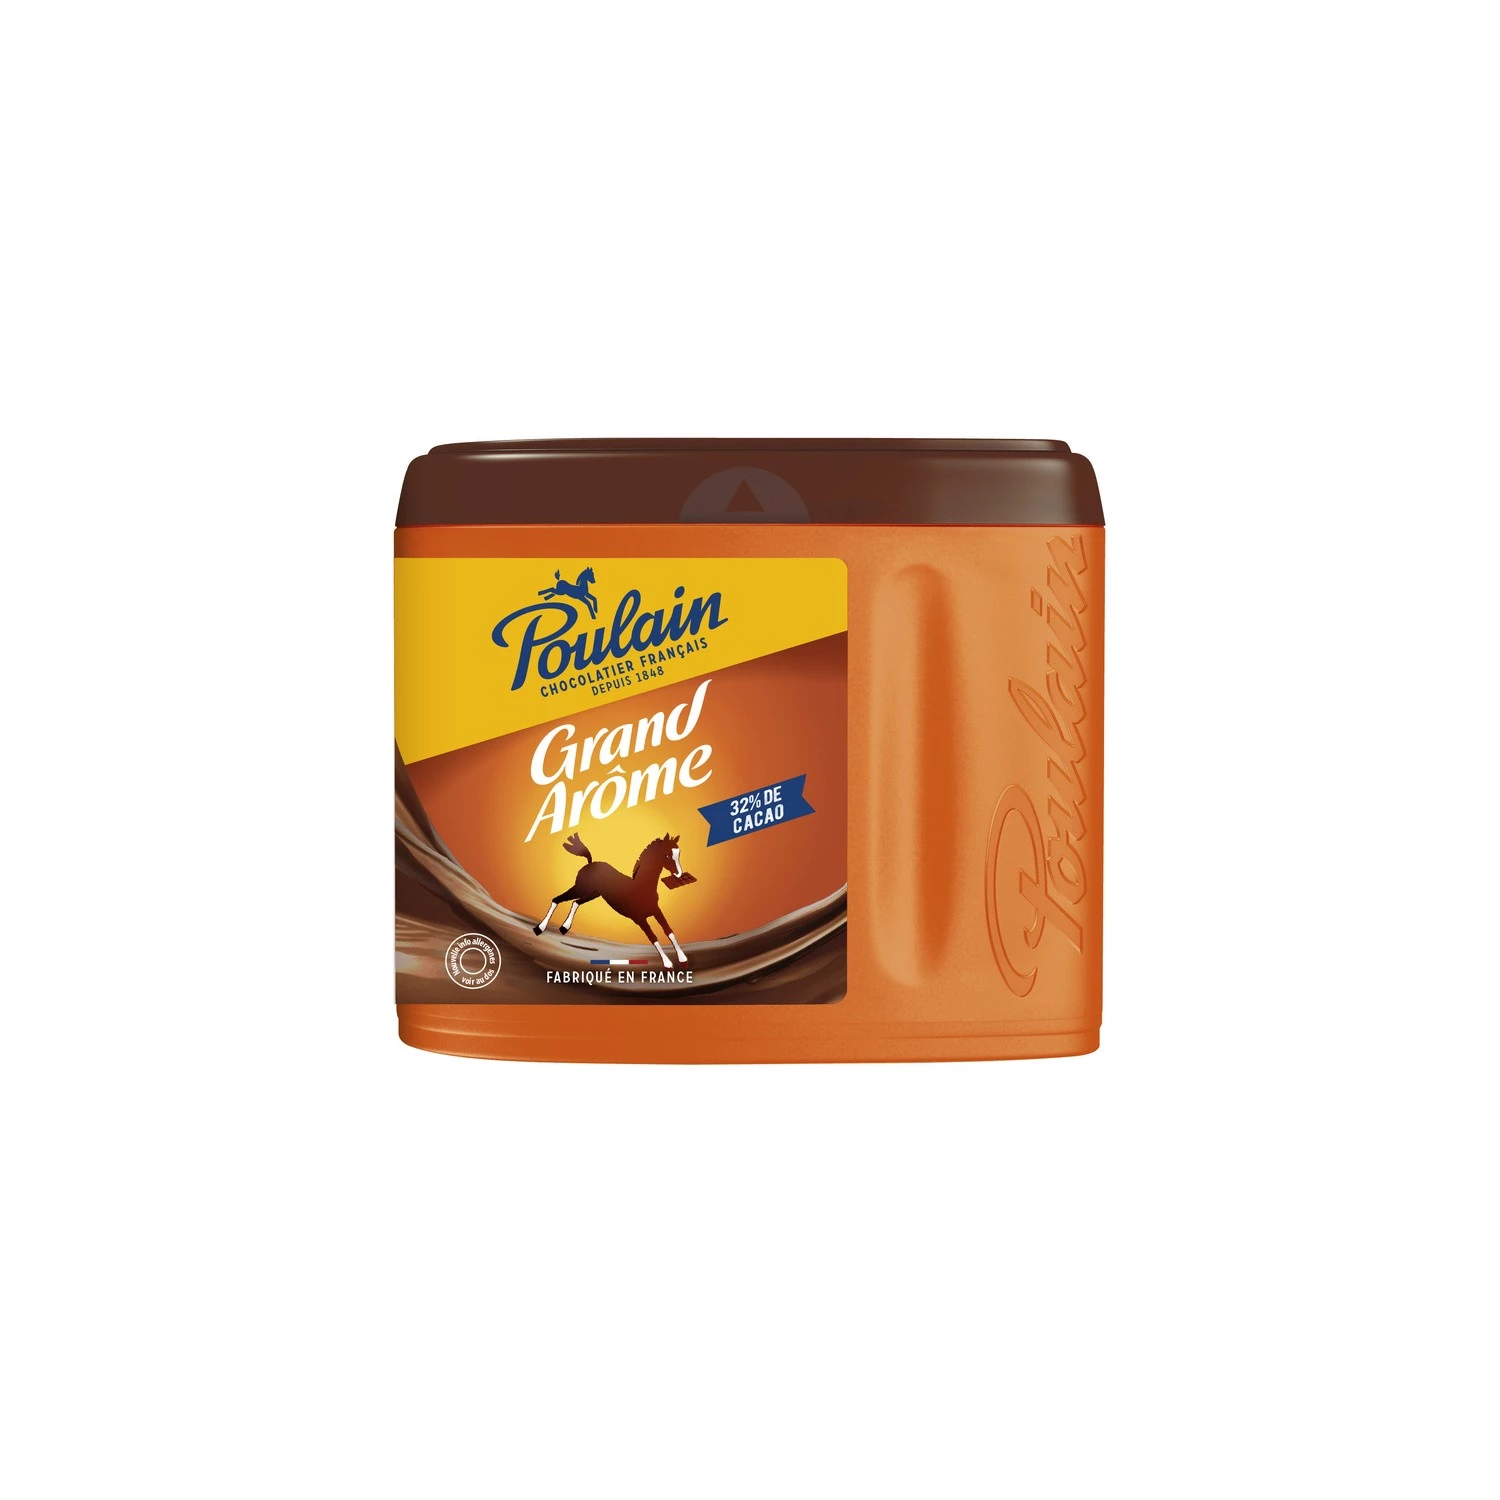 Poudre de Chocolat Grand Arôme 450g - POULAIN